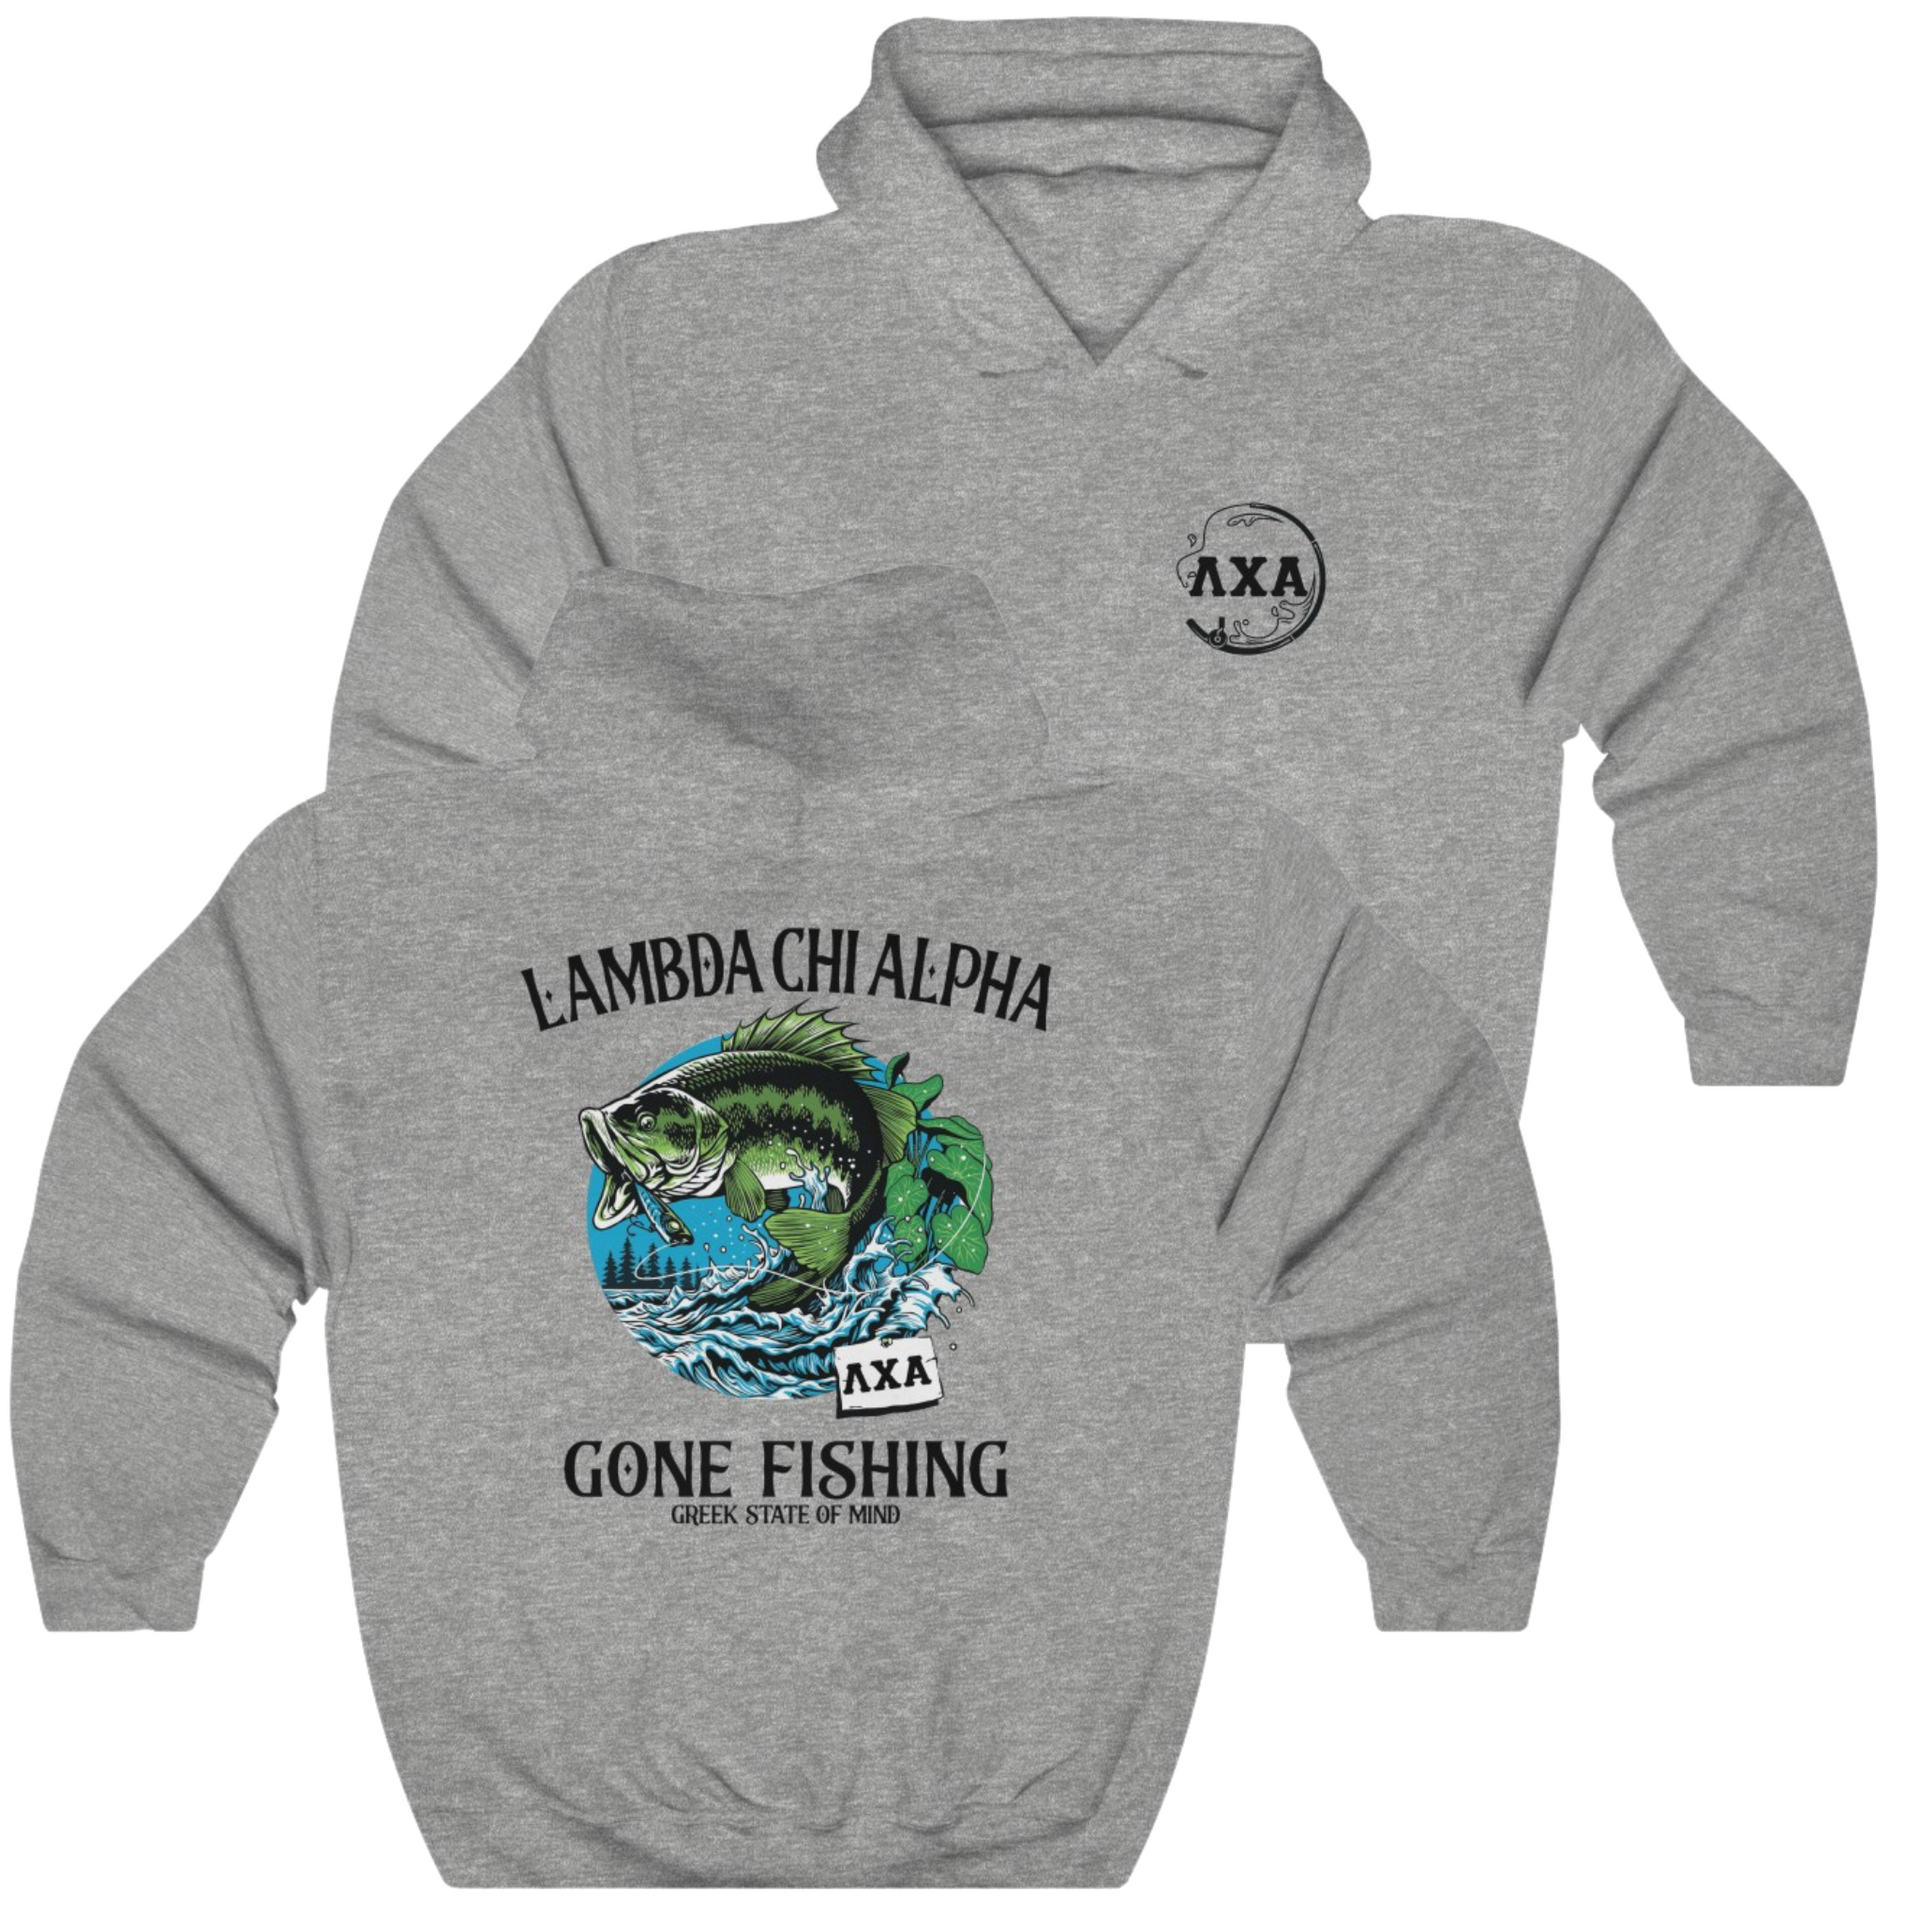 Grey Lambda Chi Alpha Graphic Hoodie | Gone Fishing | Lambda Chi Alpha Fraternity Apparel 